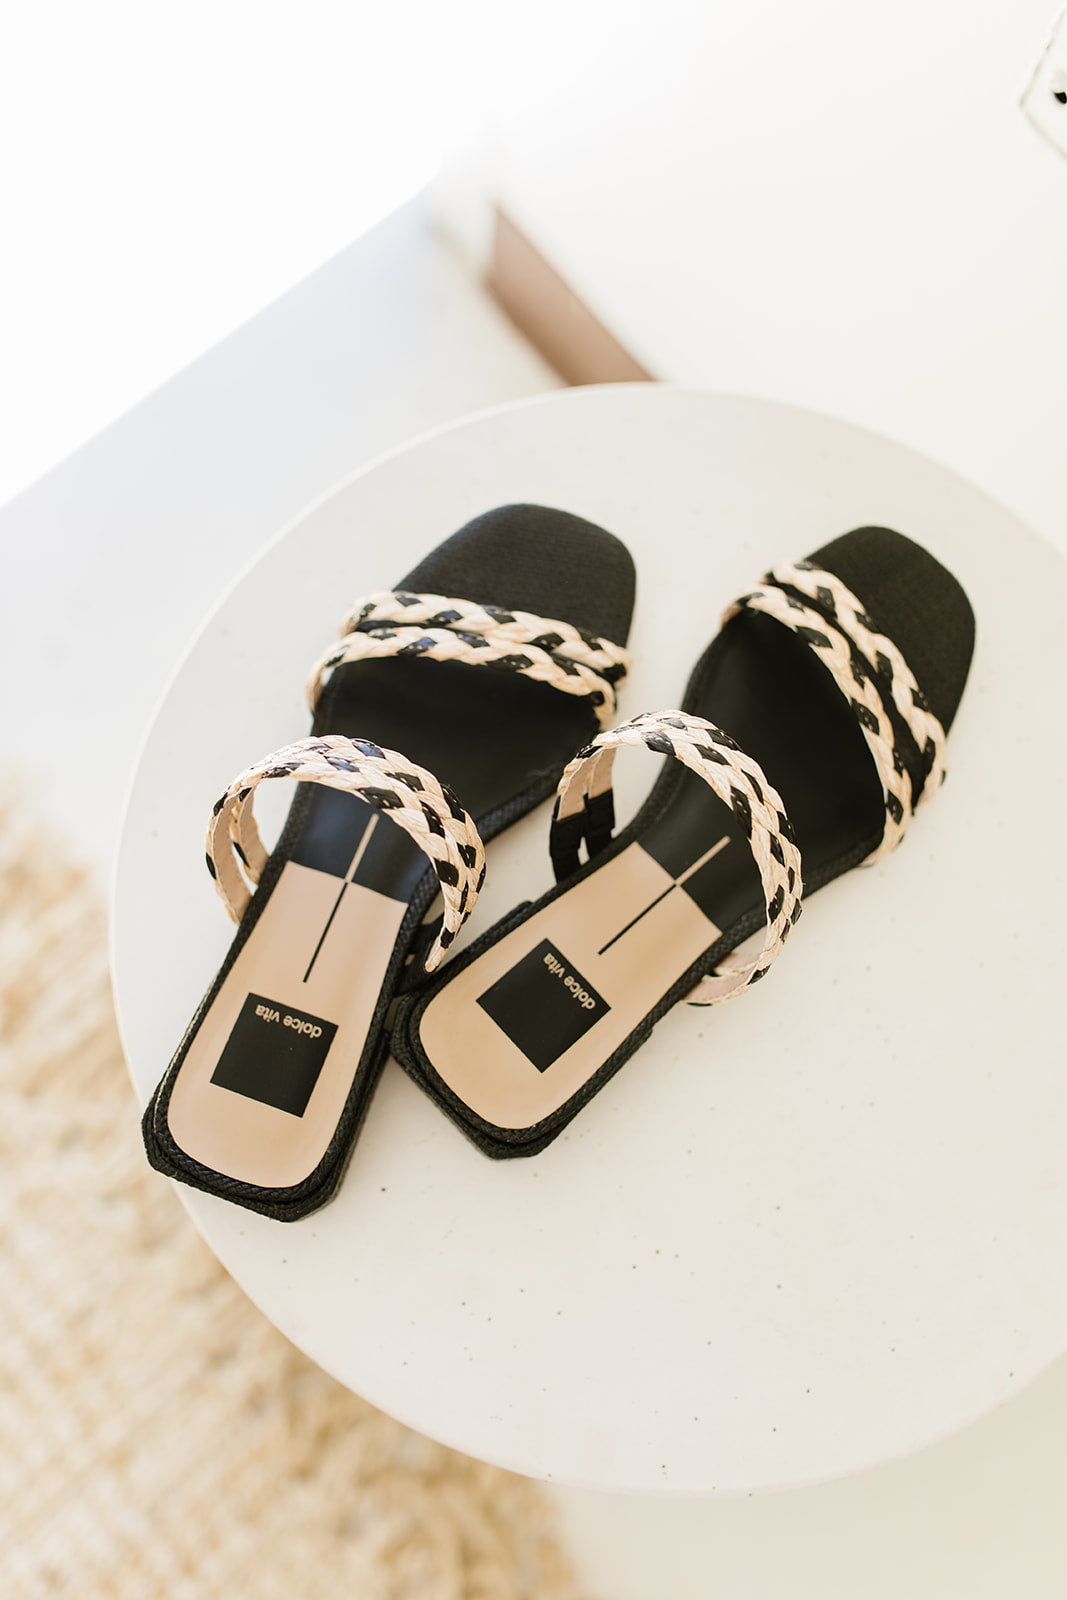 haize raffia sandals in black + natural raffia // dolce vita – shop zoco